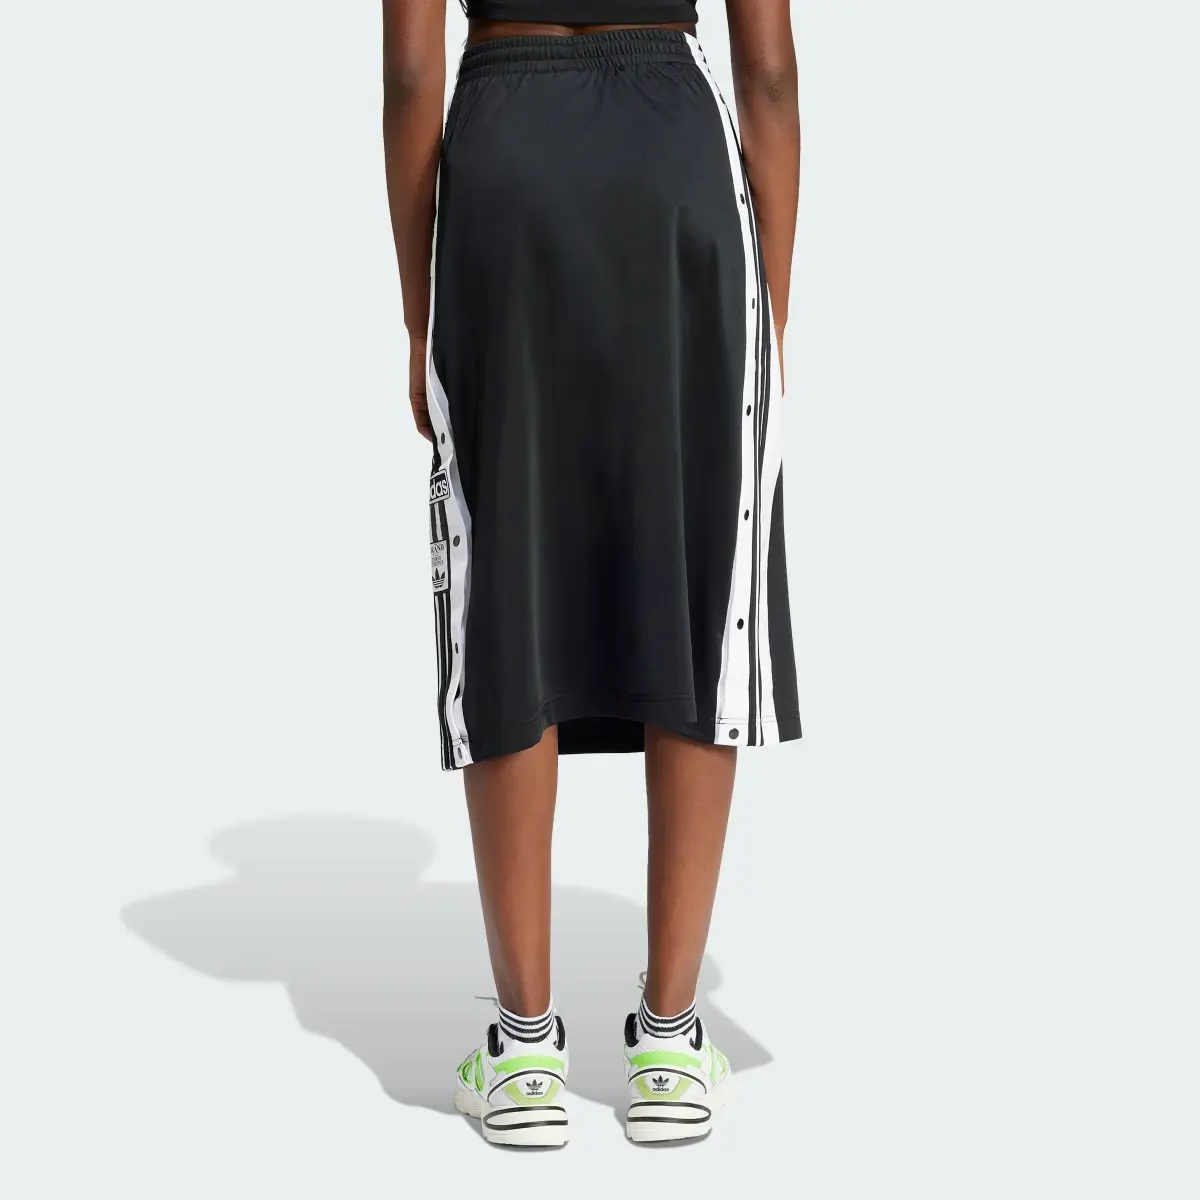 Adidas Adibreak Skirt. 2